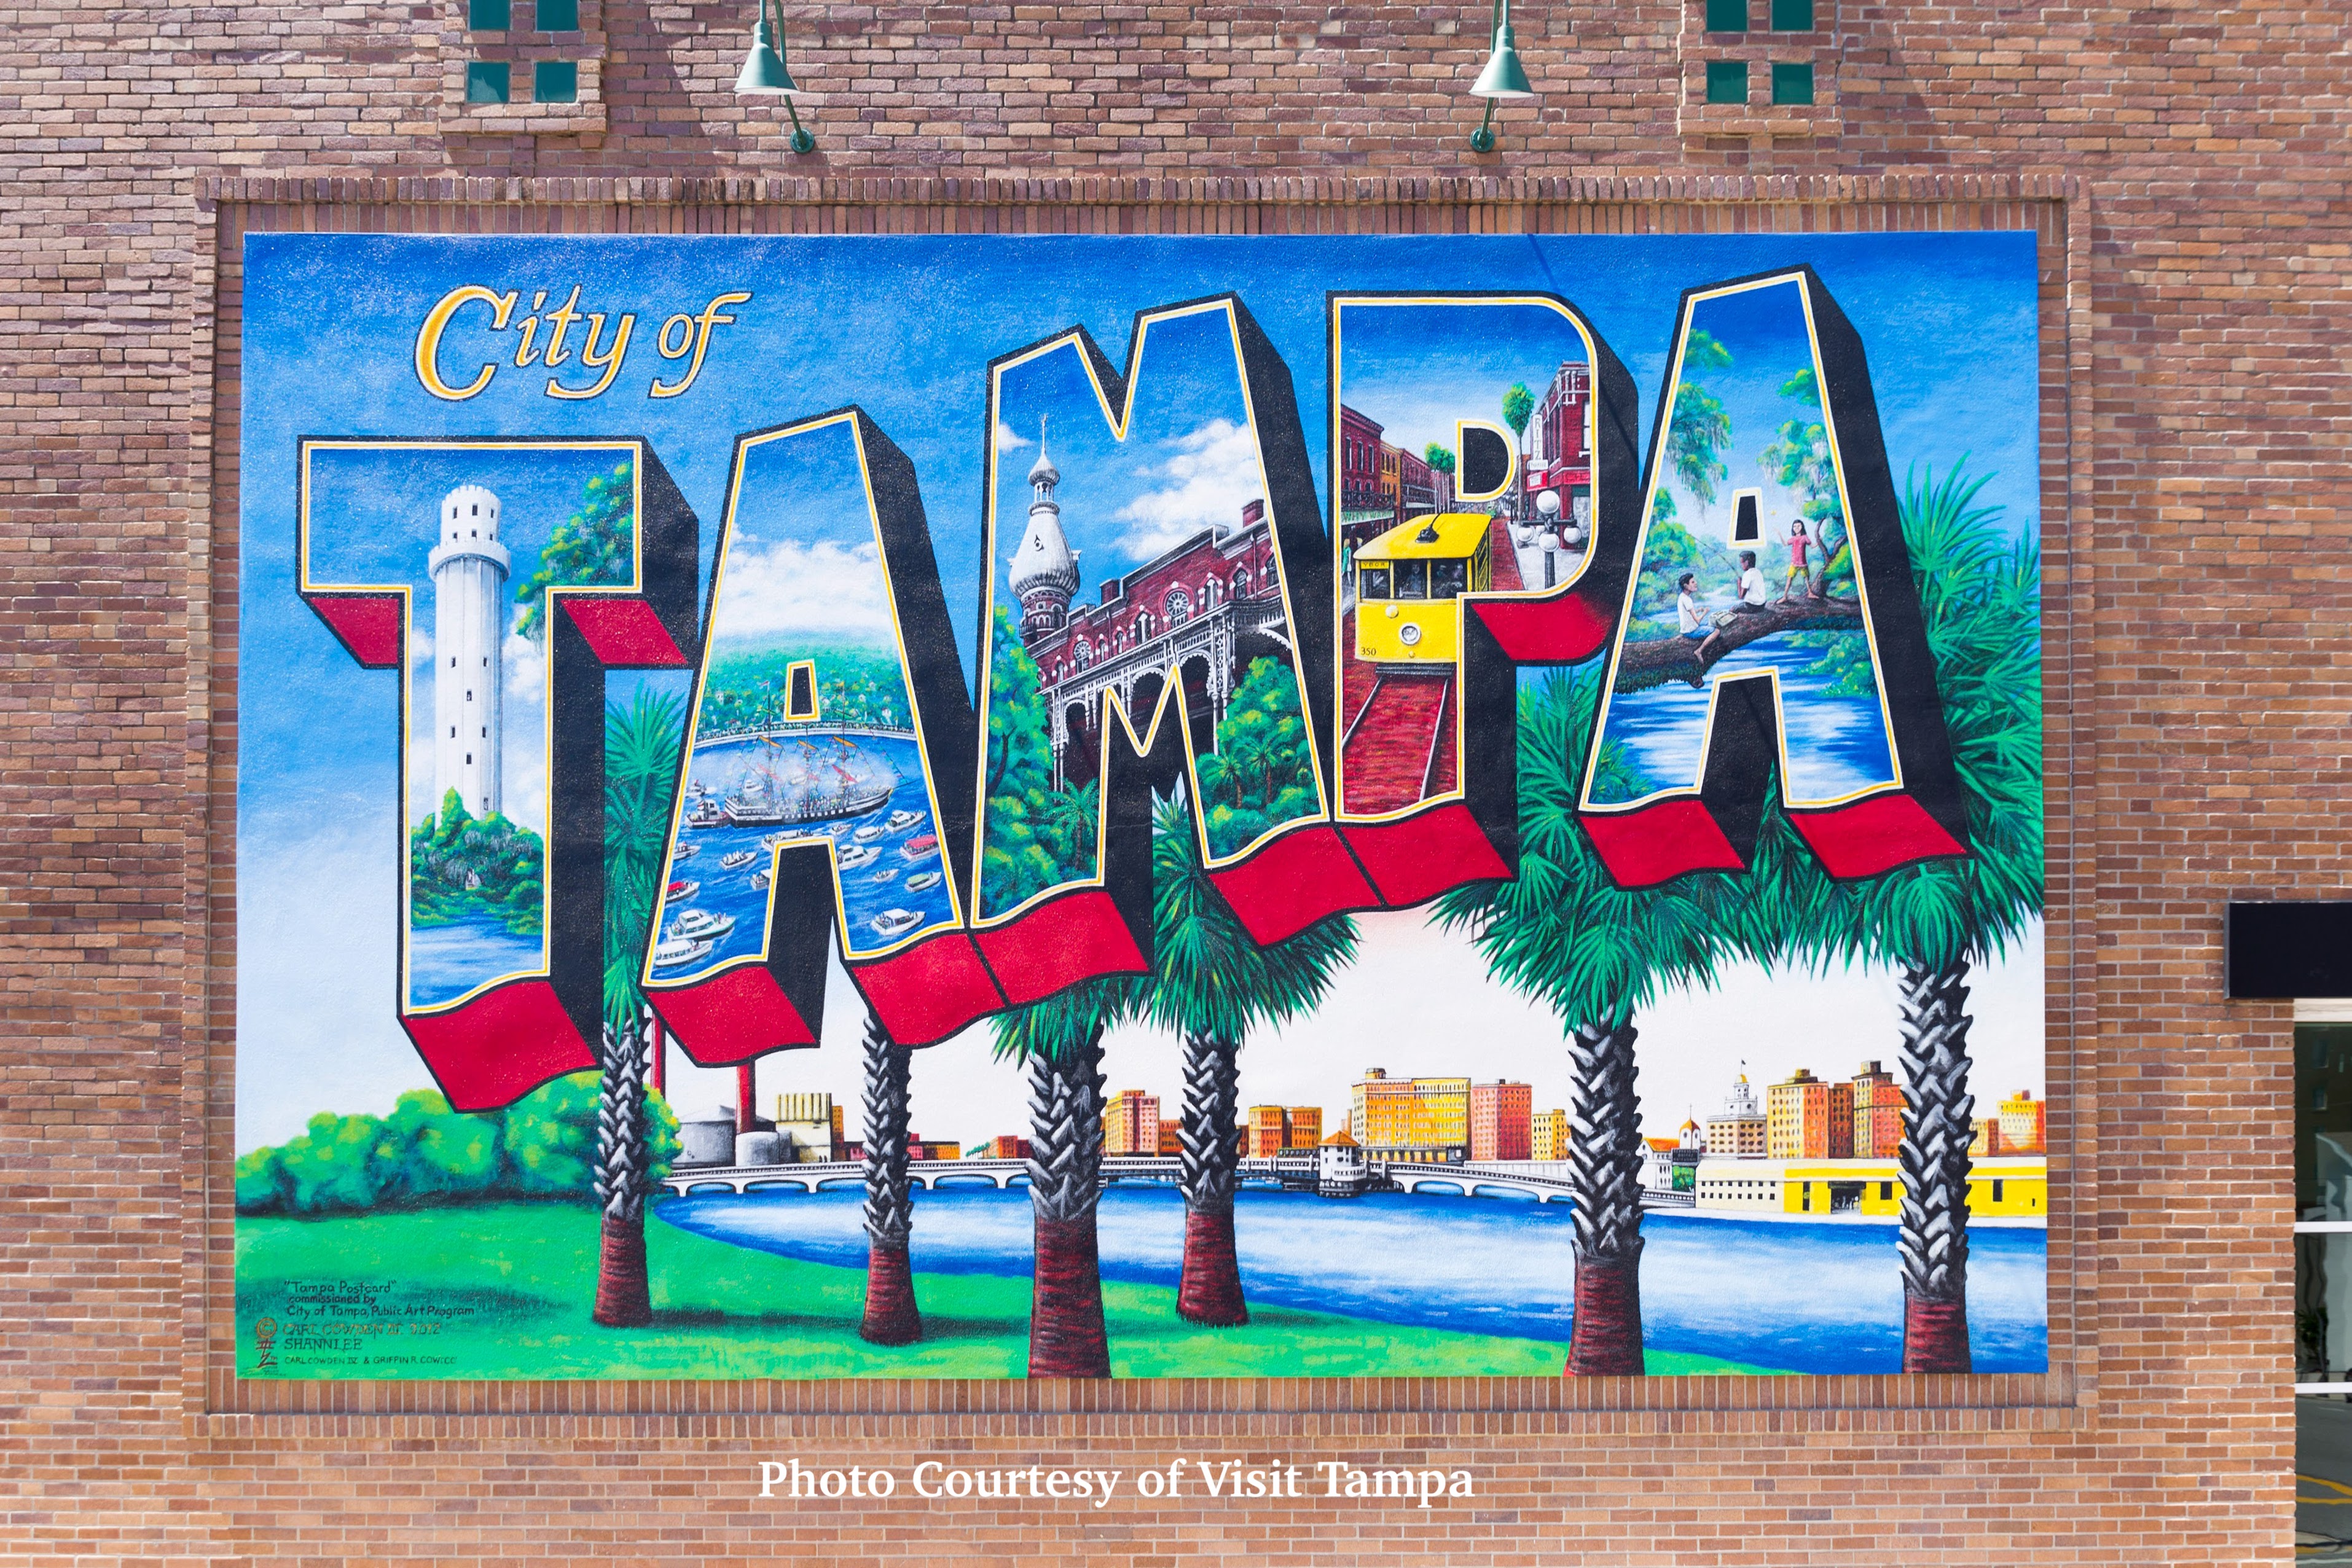 City of Tampa Photo Courtesy